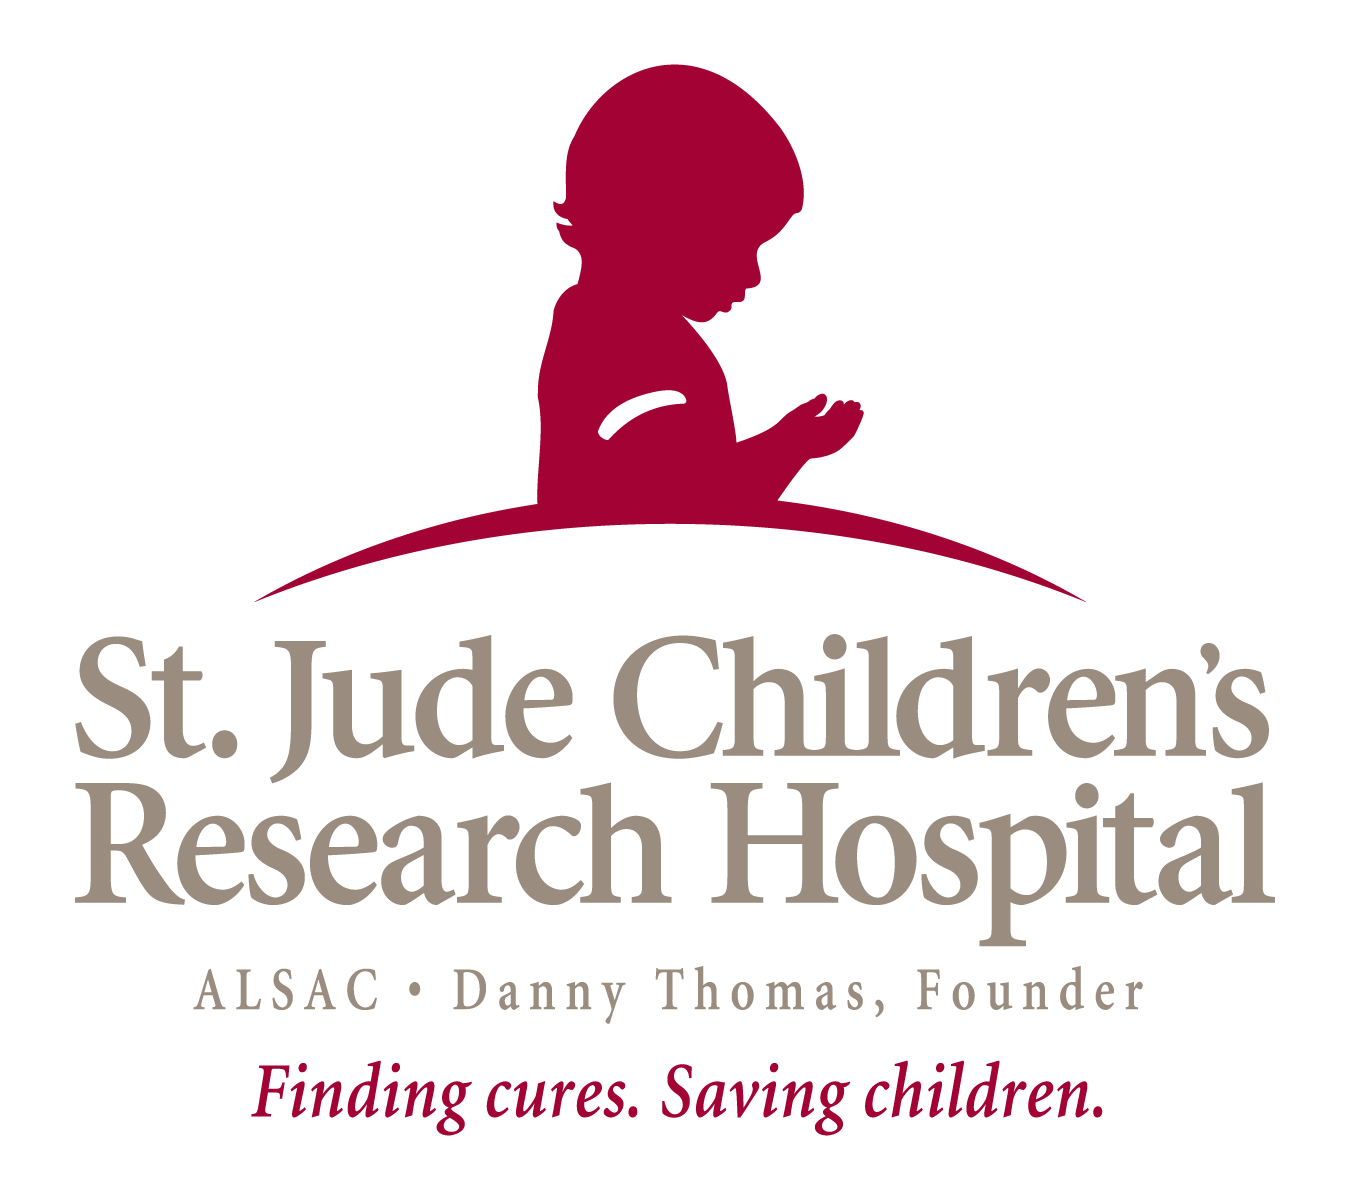 ALSAC/St. Jude Children's Research Hospital